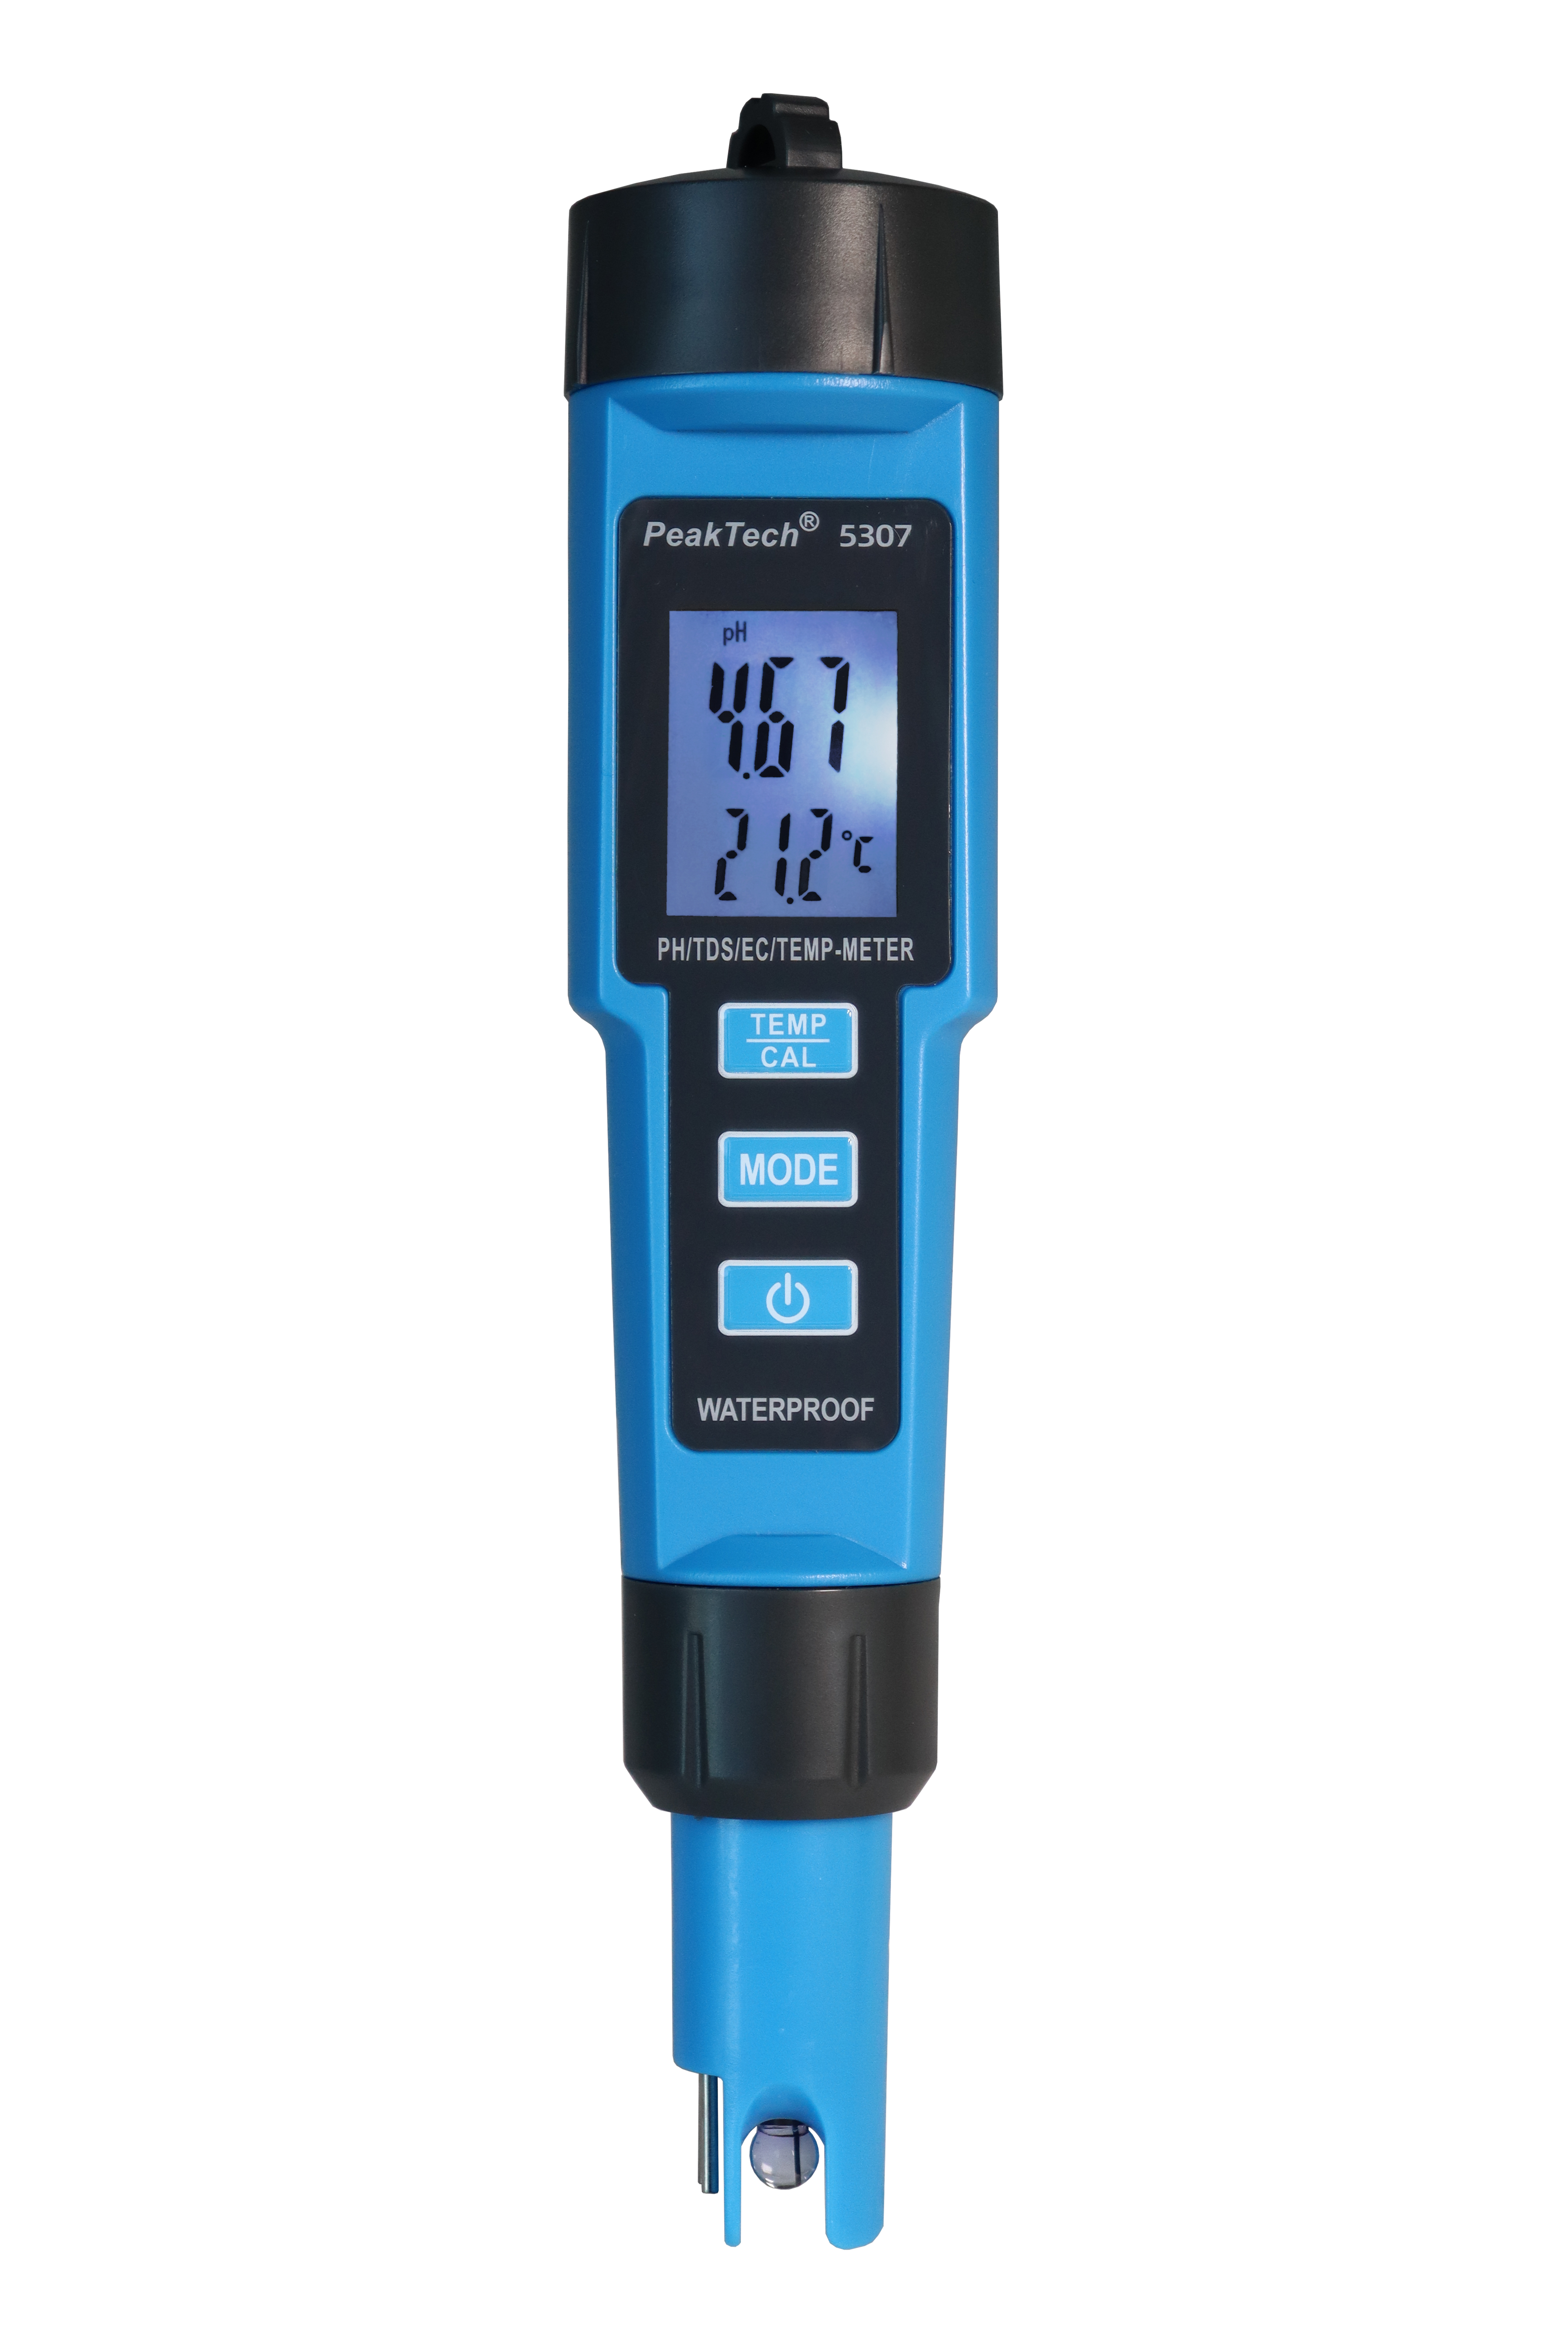 «PeakTech® P 5307» 4 in 1 PH-Meter for PH/EC/TDS/TEMP